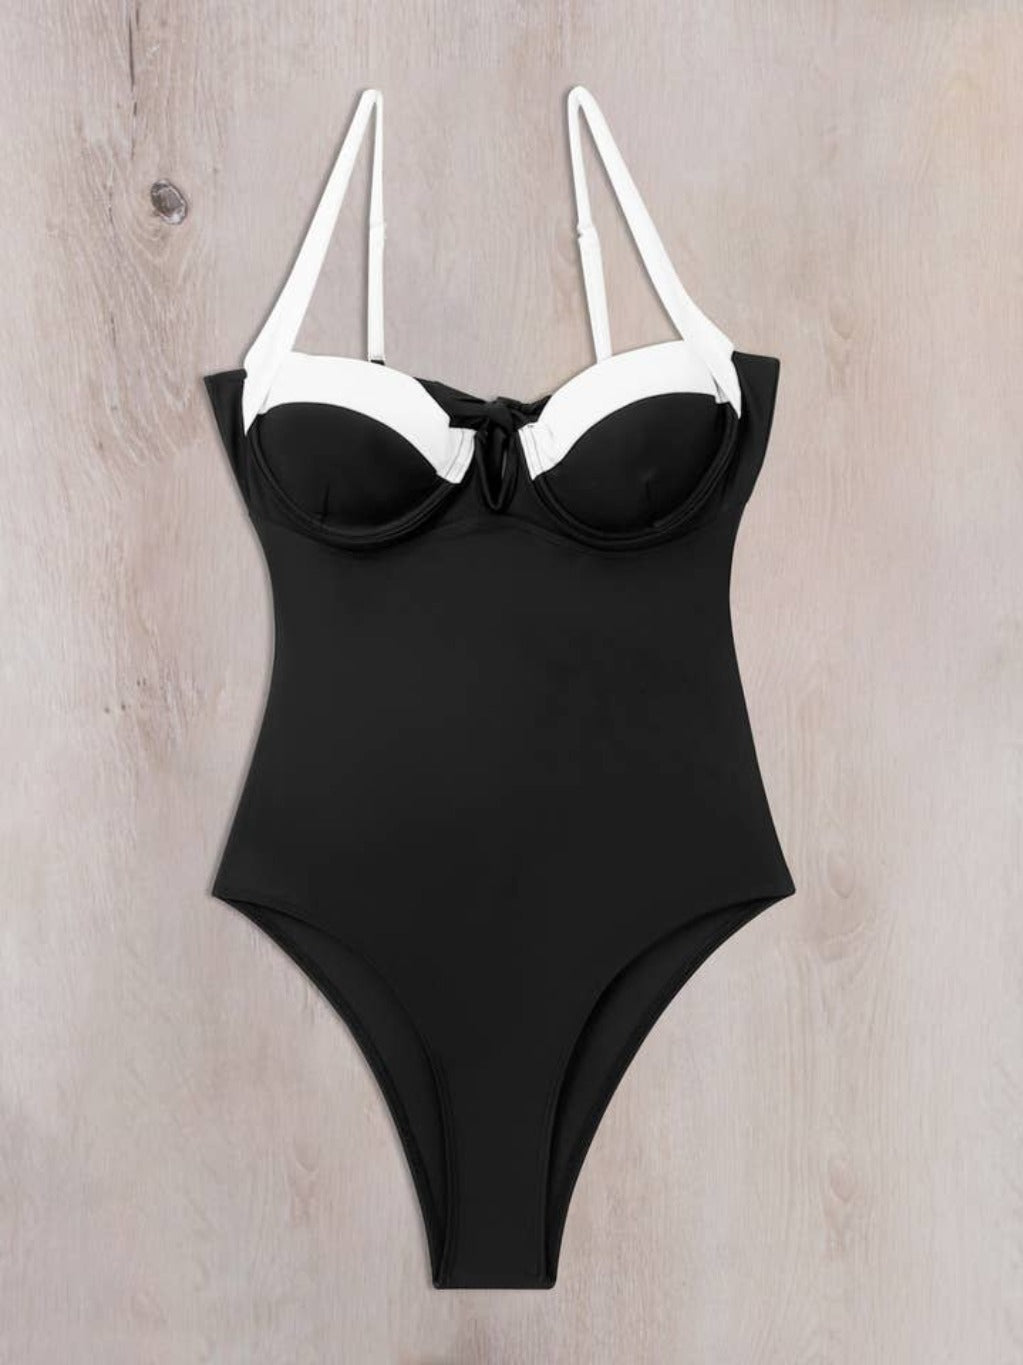 Epicplacess Swimwear Classic Black White Contrast Tankini One Piece Swimsuit